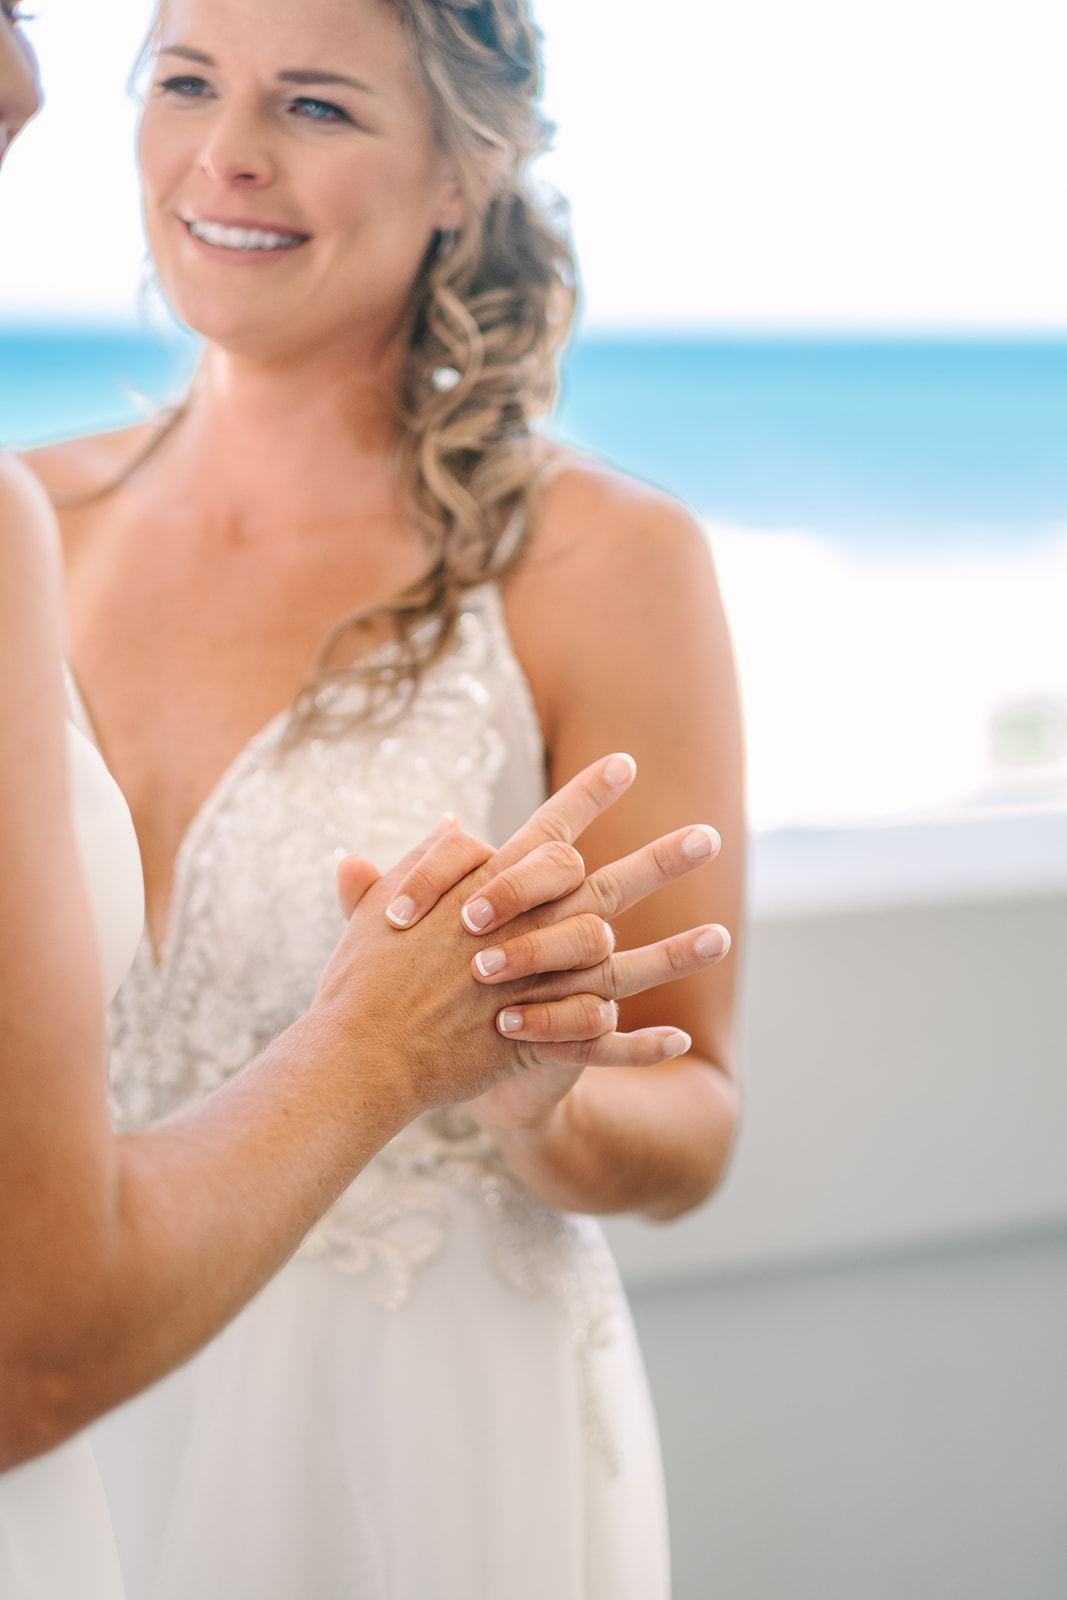  margaritaville pensacola florida lesbian beach wedding blue barefoot sparkler send off photographer